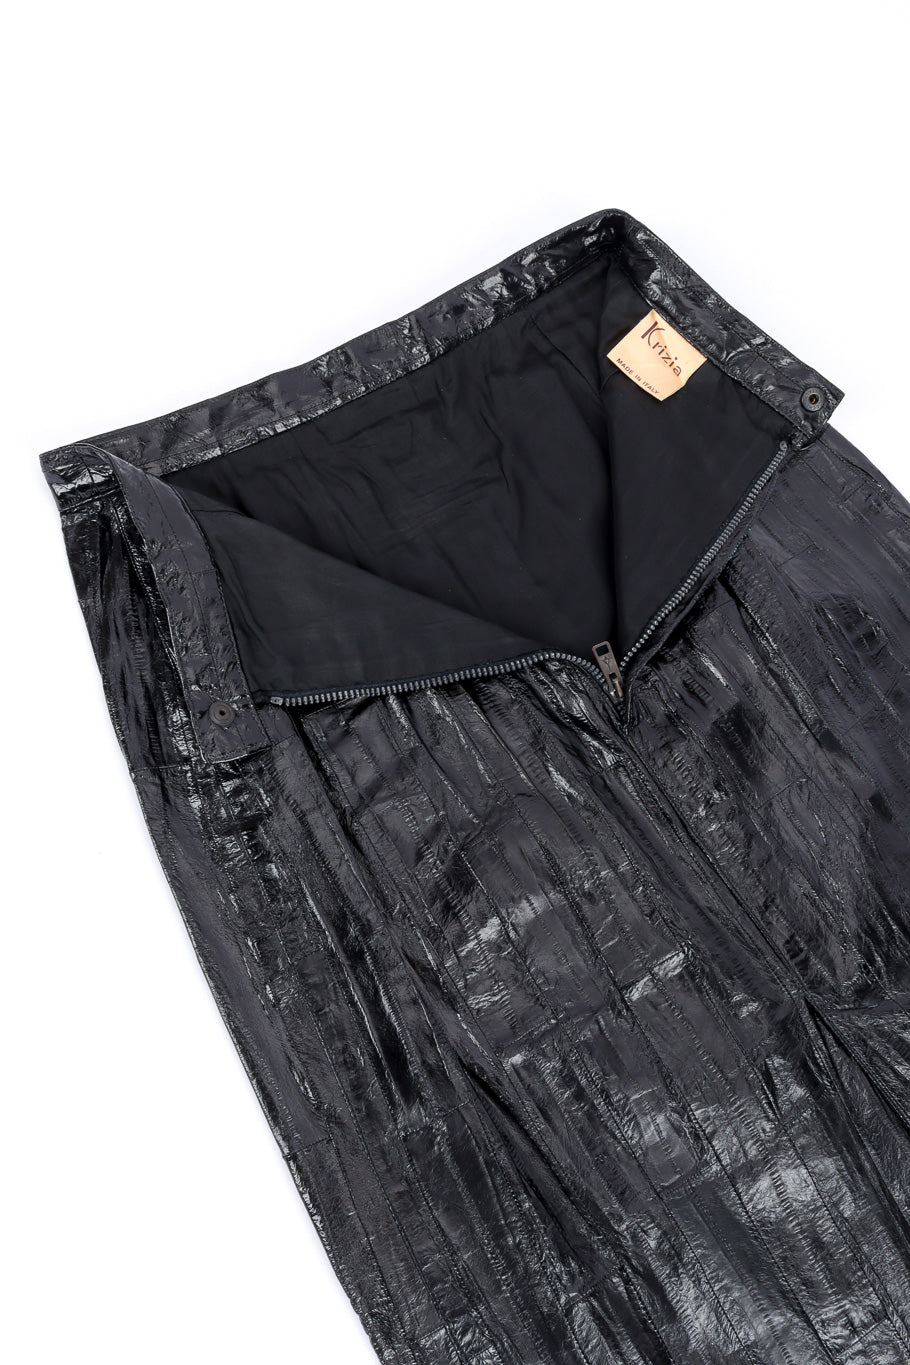 Vintage Krizia Eel Patent Leather Skirt unzipped view of lining @recessla